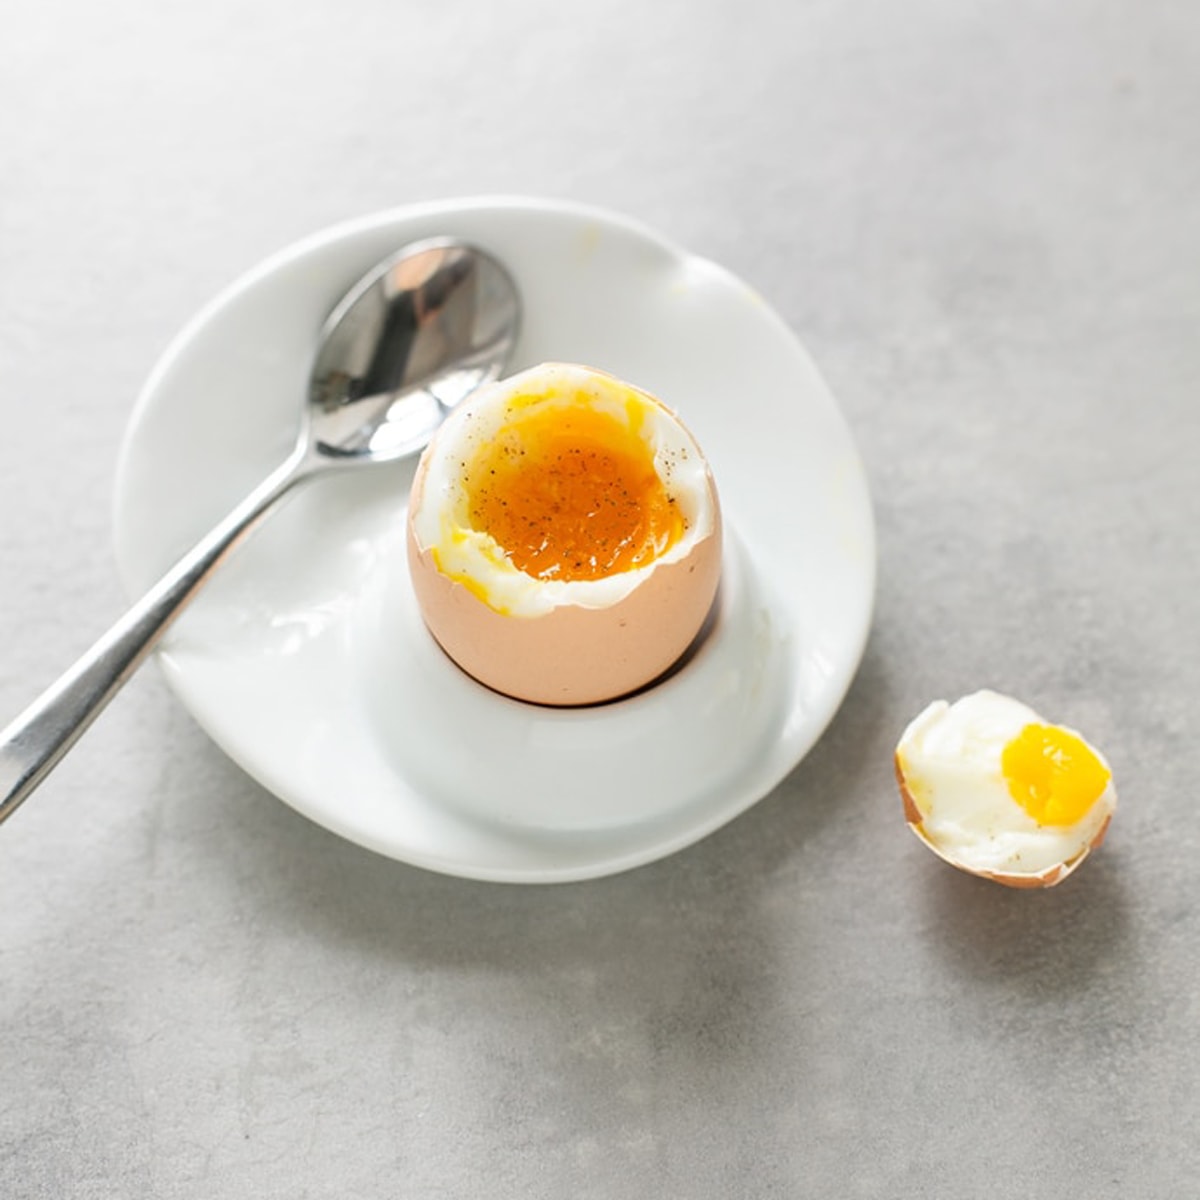 https://www.thepetitecook.com/wp-content/uploads/2019/12/perfect-soft-boiled-eggs-recipe.jpg